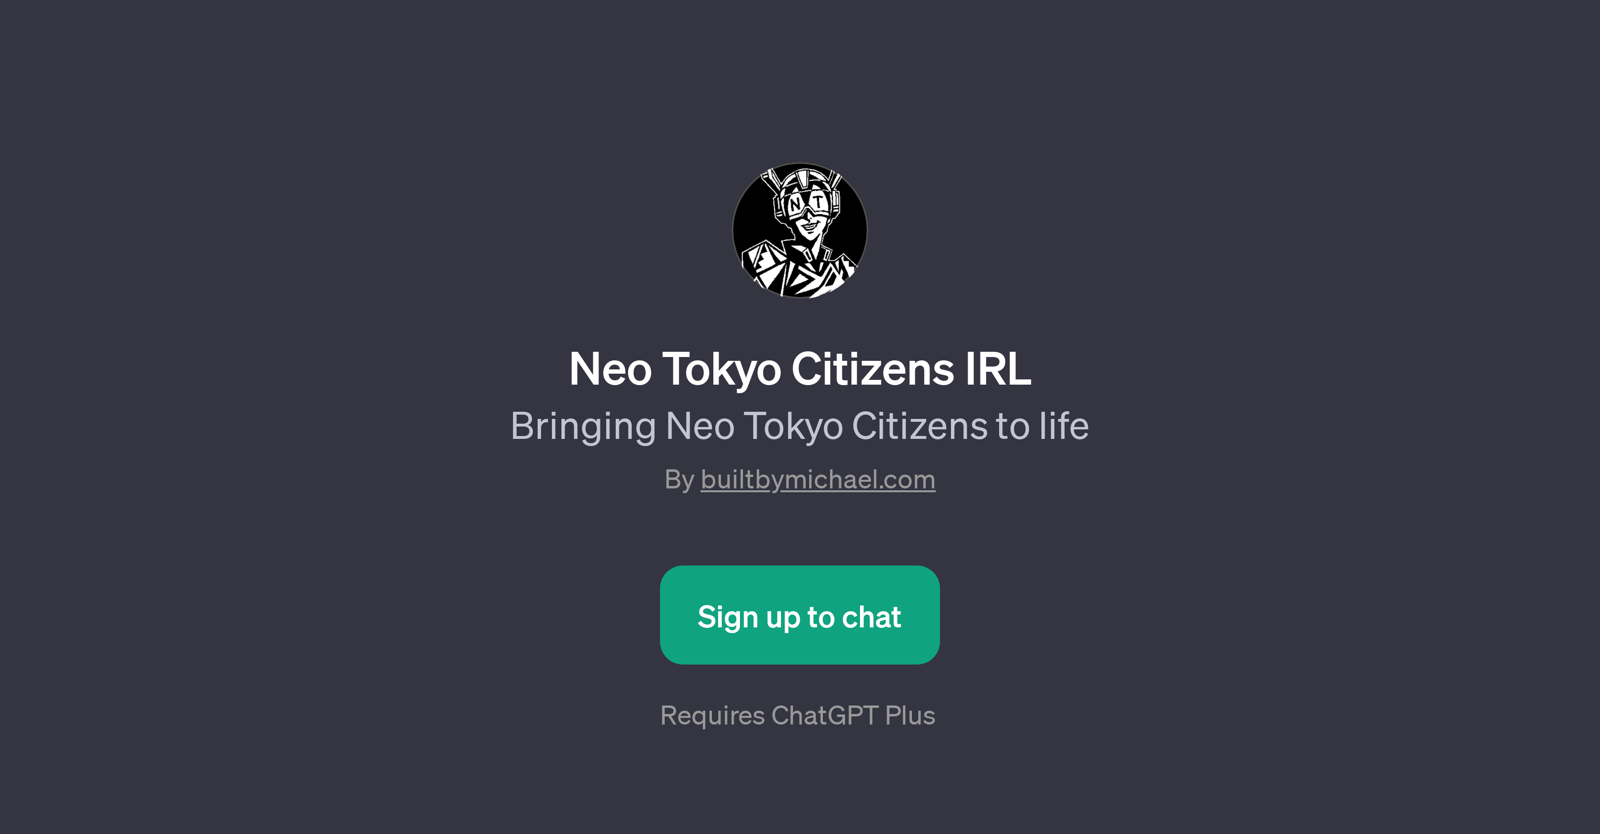 Neo Tokyo Citizens IRL website